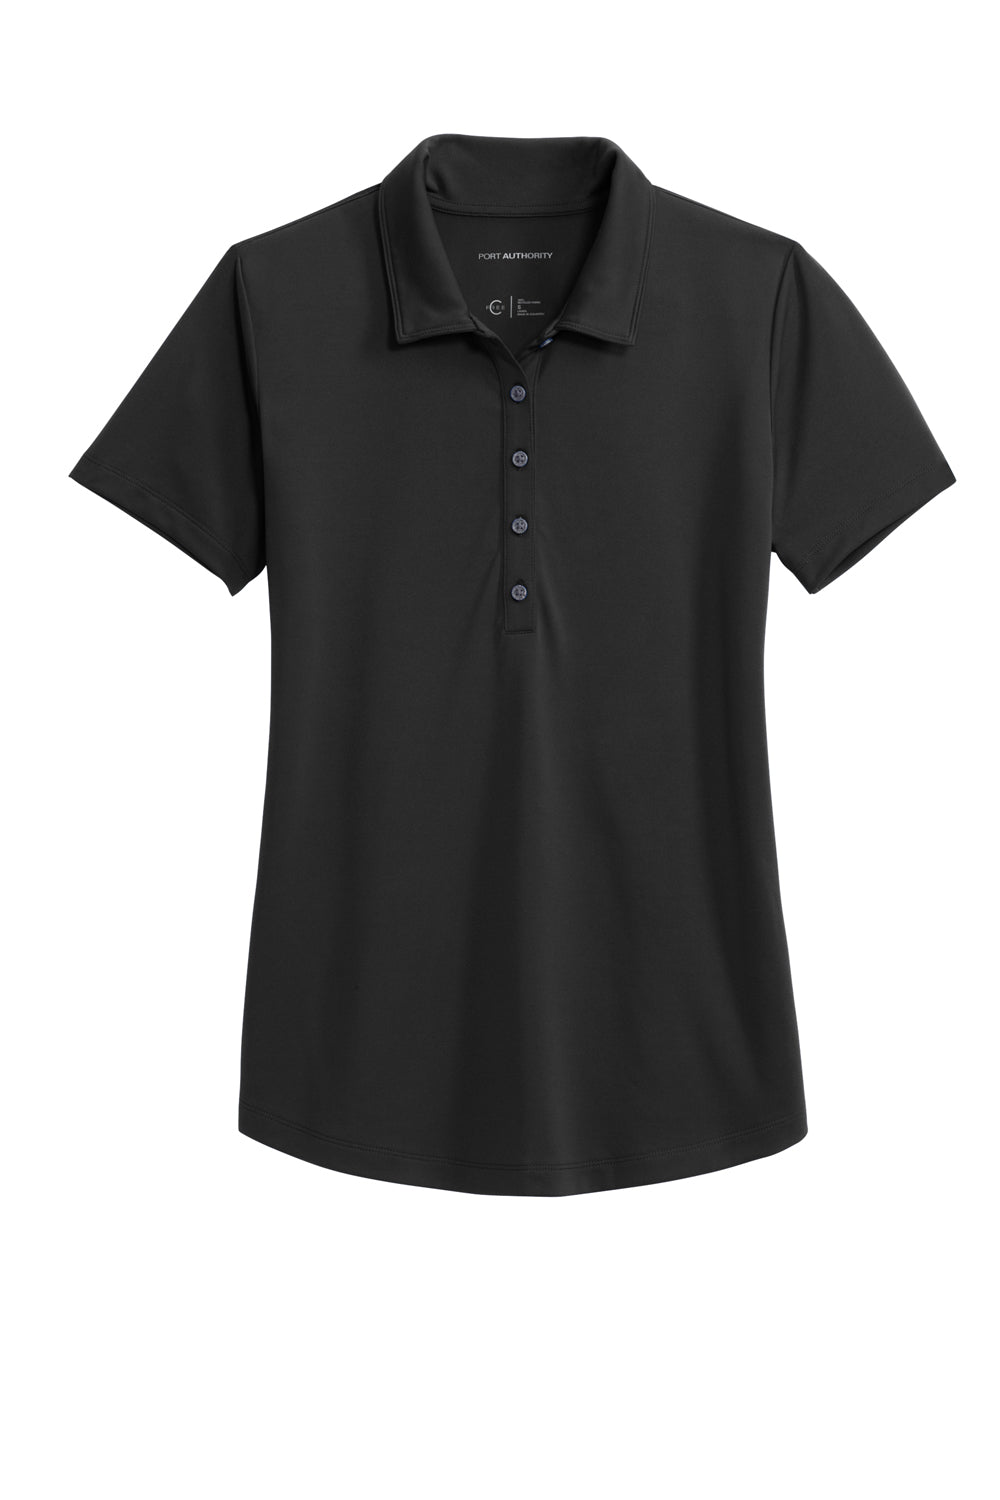 Port Authority LK864 C-Free Performance Short Sleeve Polo Shirt Deep Black Flat Front